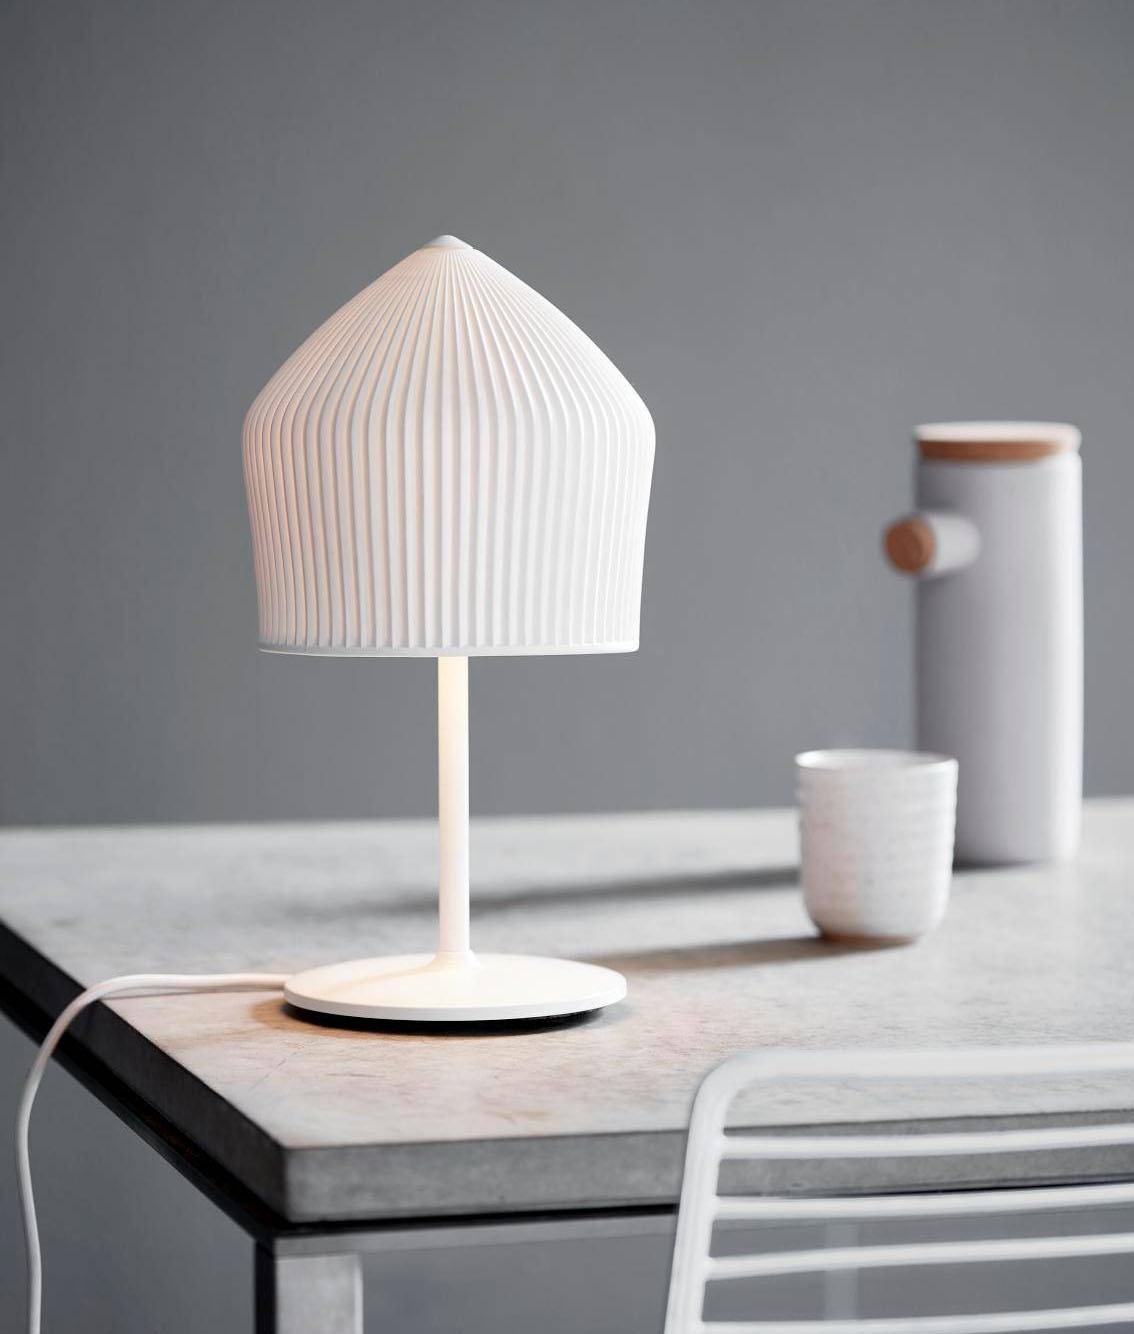 Ceramic Shade Table Lamp With Pencil Pleat, Illuminated Globe Table Lamp Shade